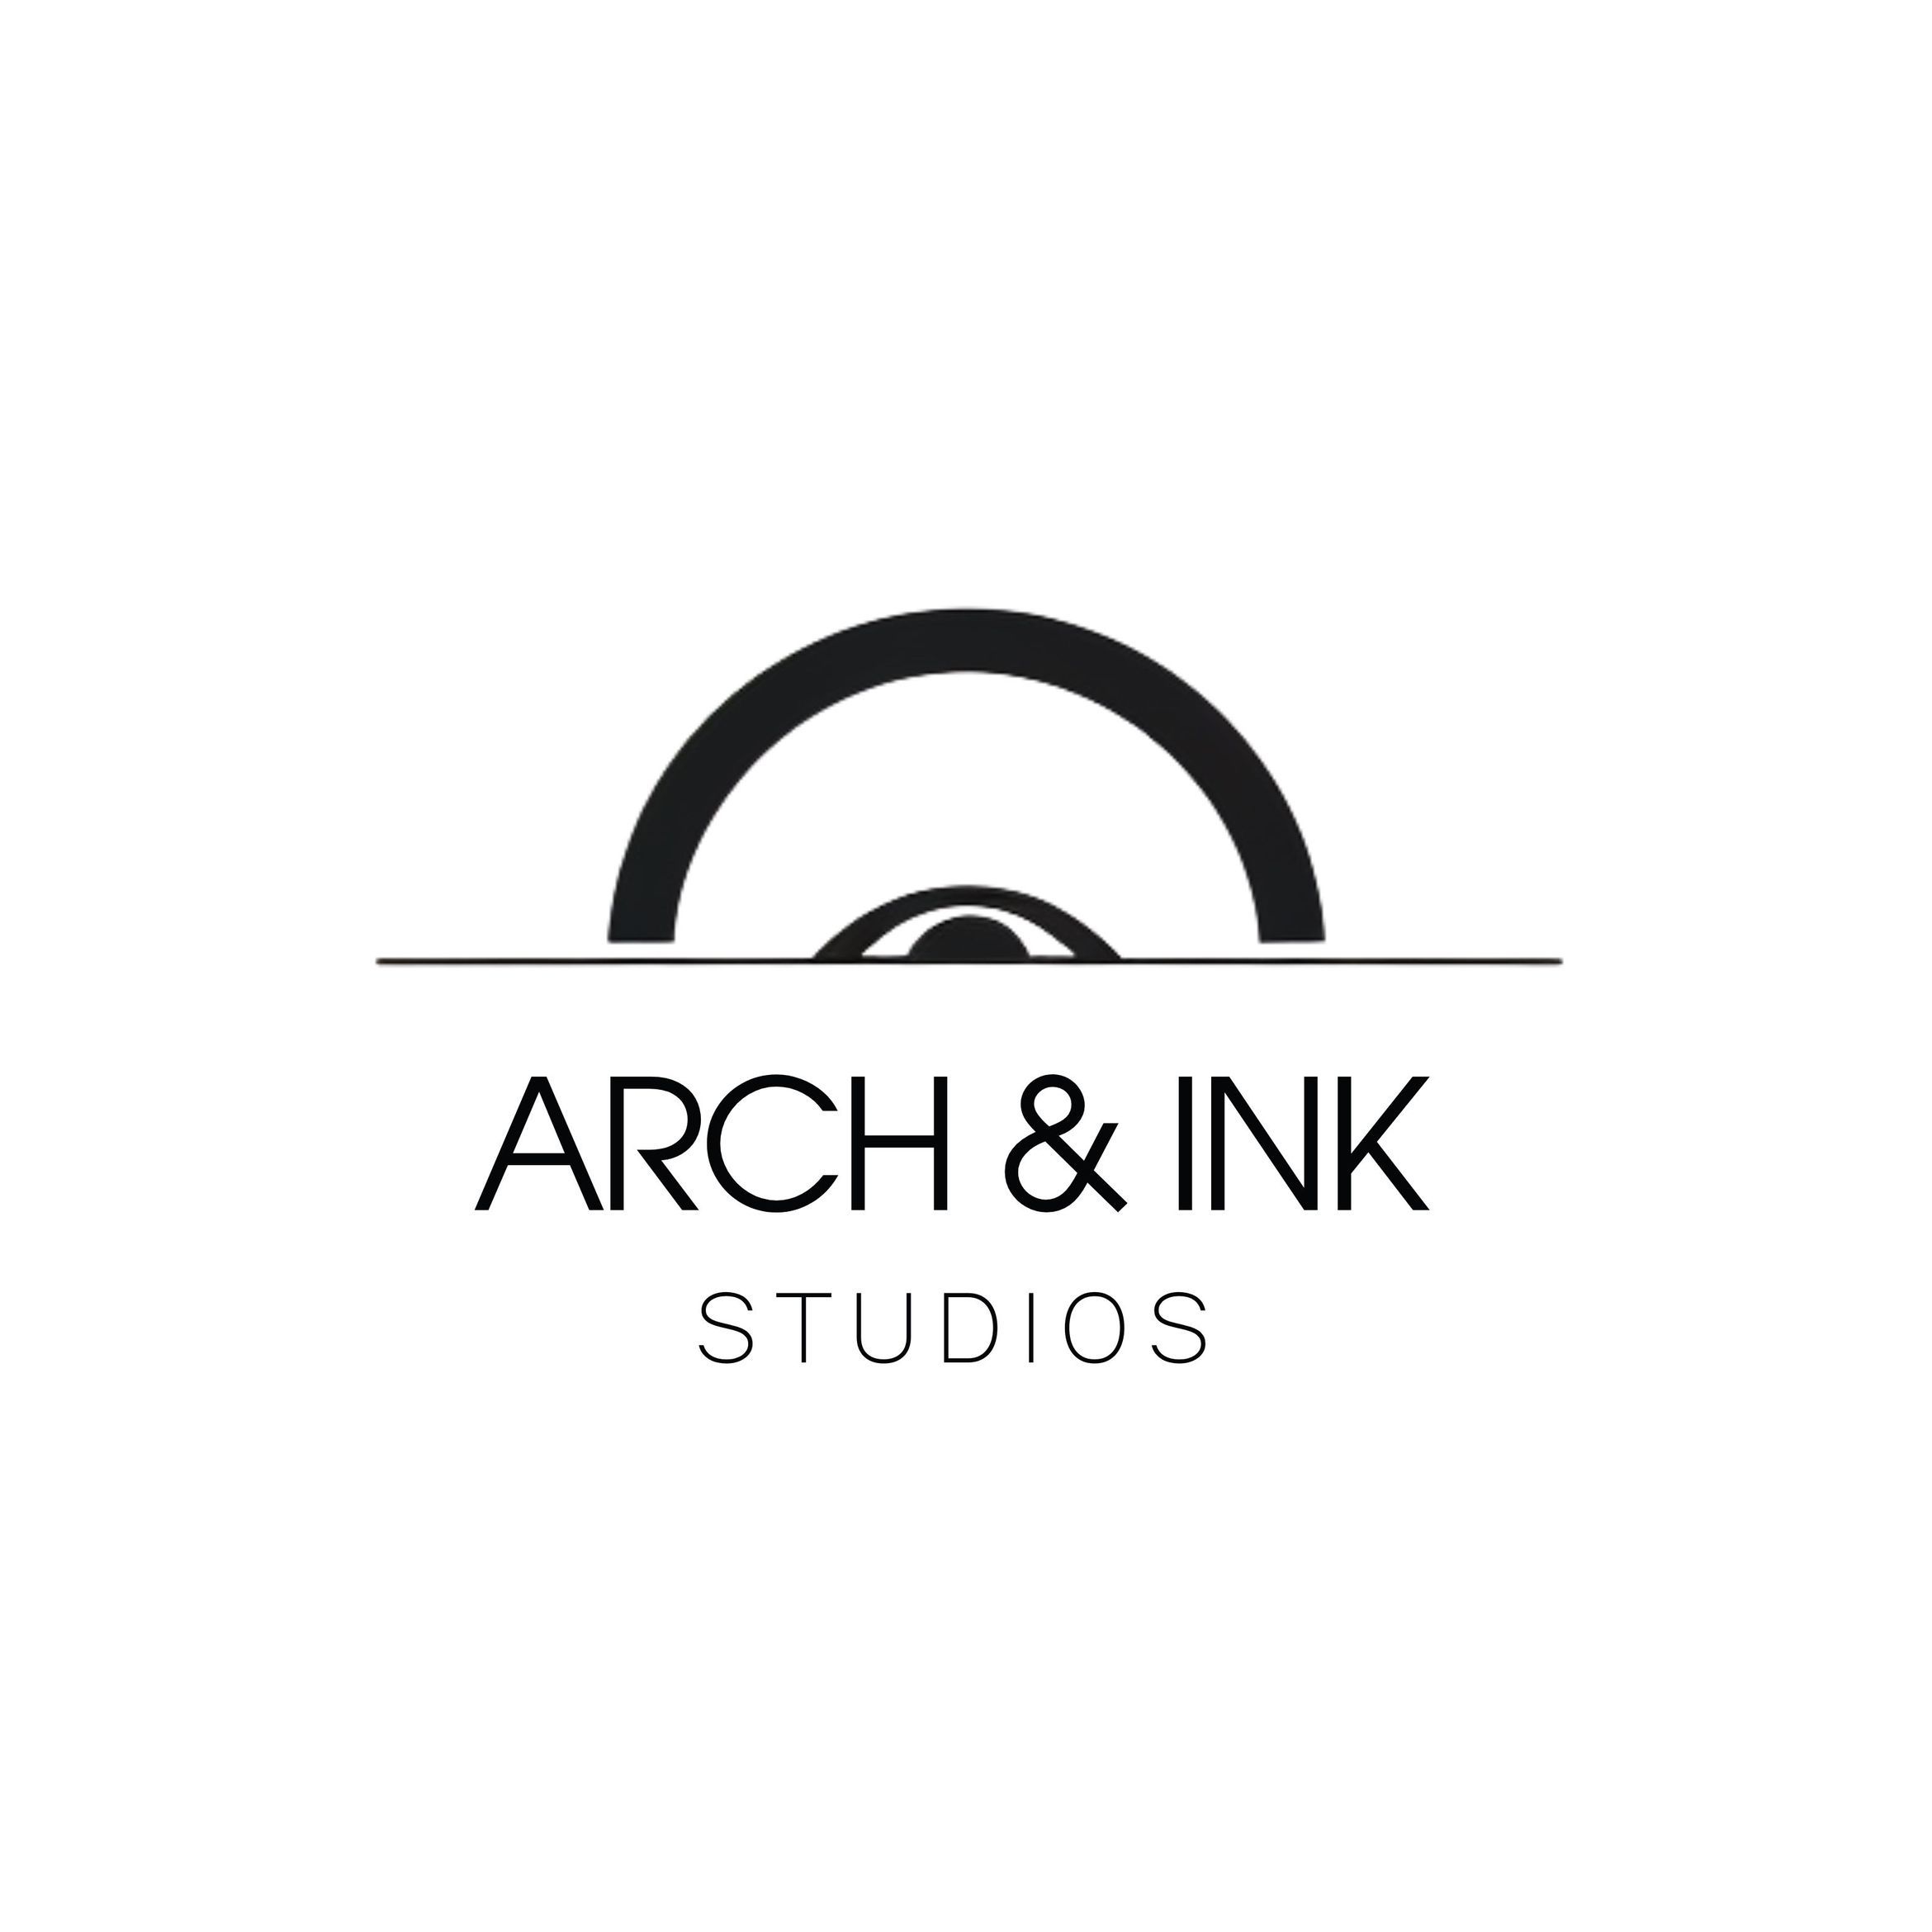 Arch & Ink Studios, 16460 Bake Pkwy, Irvine, 92618